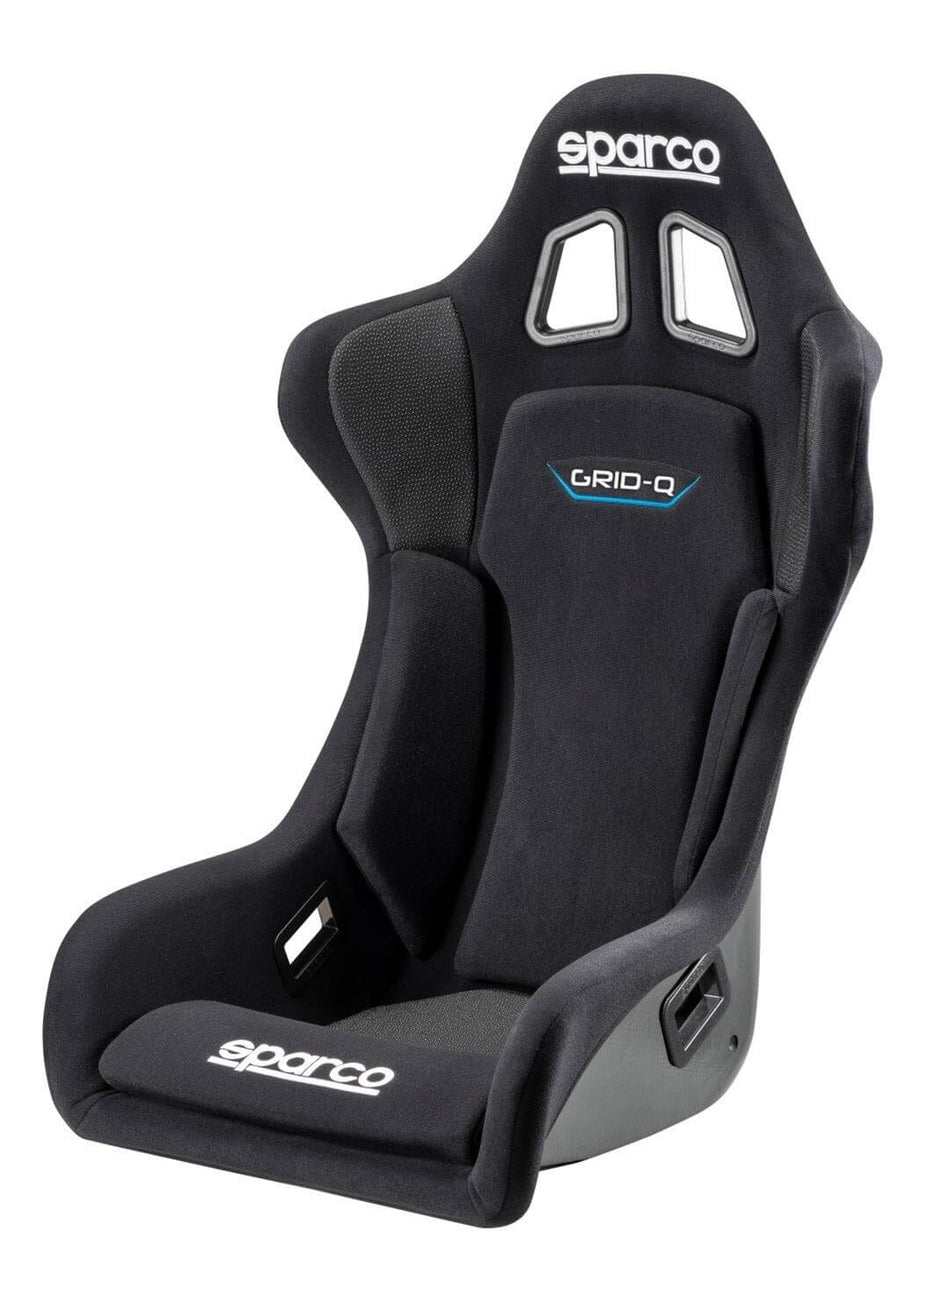 Grid Racing Seat - $899.00